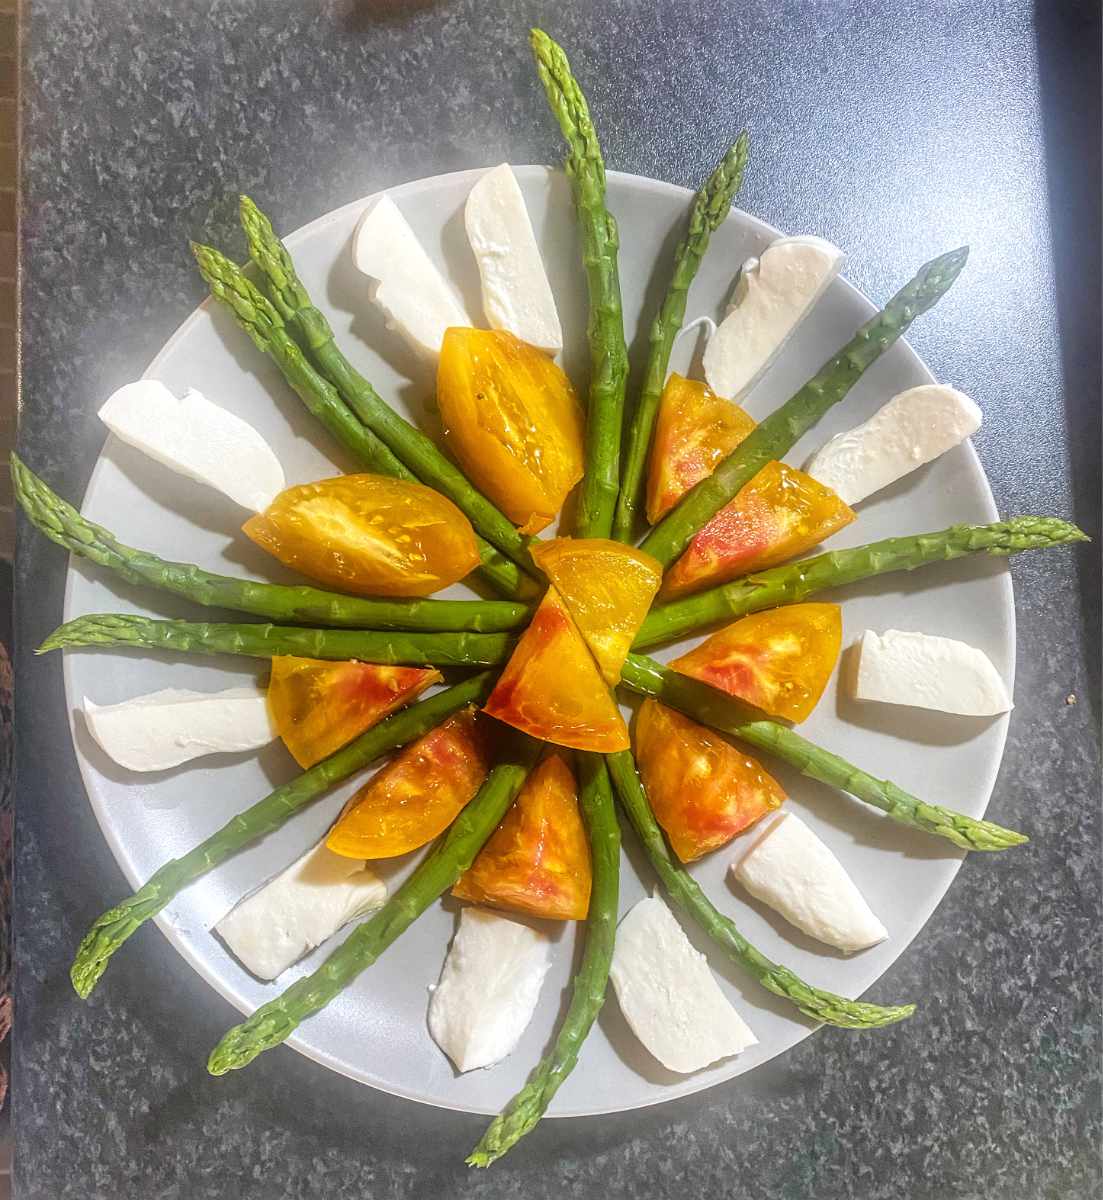 Tomatotastic summer salads - with Tzatziki too. New from the Wensum Kitchen. 

medium.com/@TheWensumKitc…

#Medium #summersalads